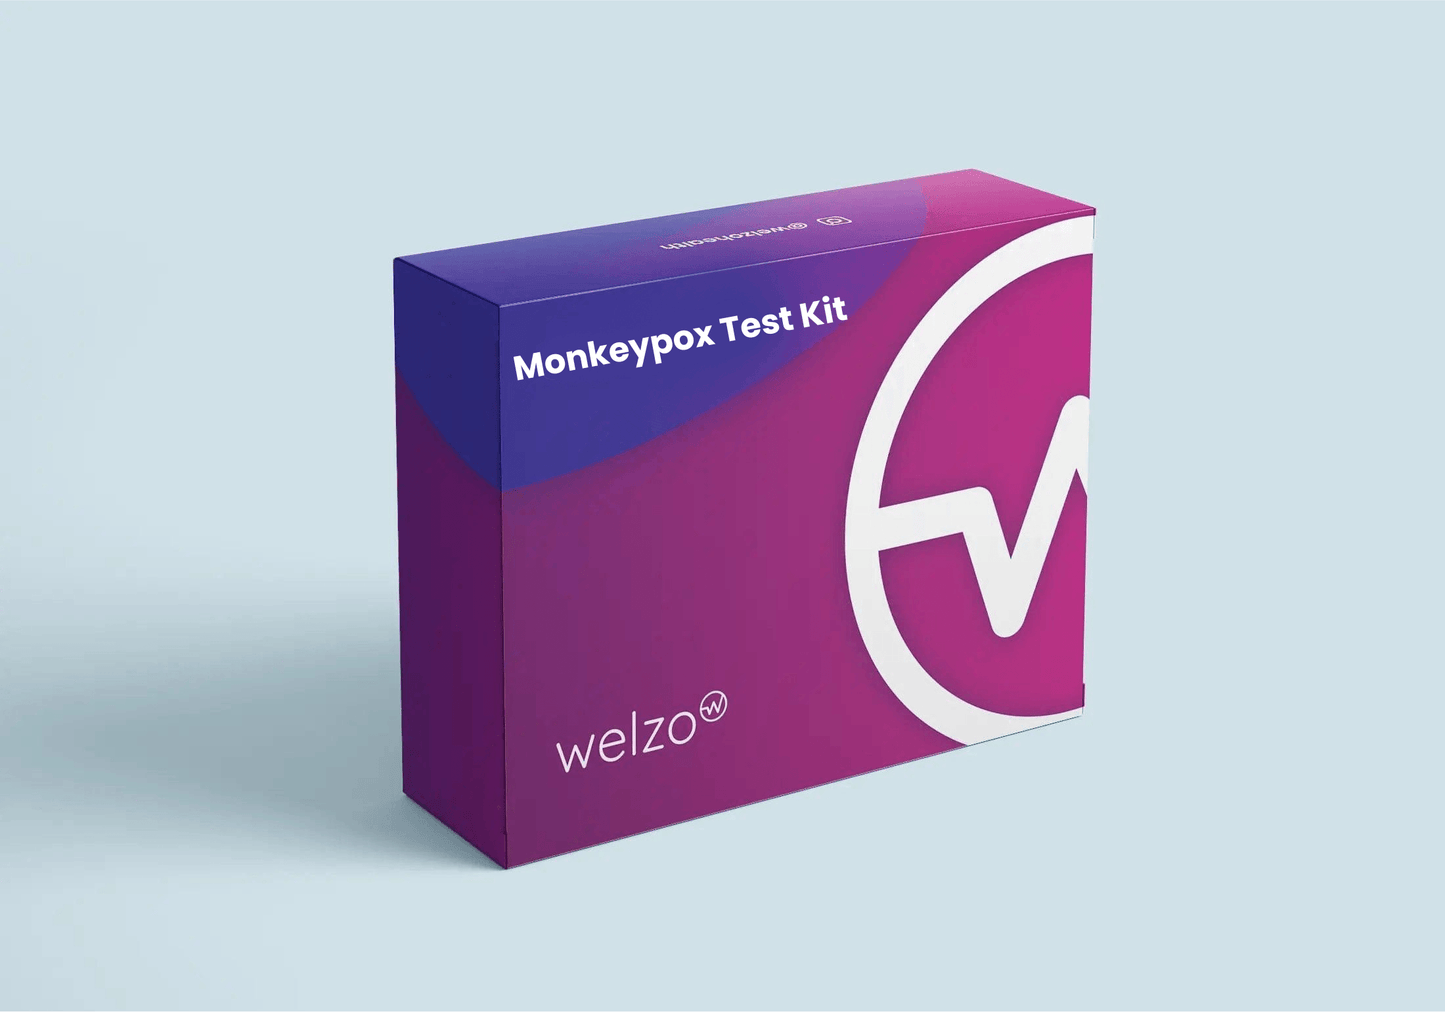 Monkeypox Test Kit - welzo